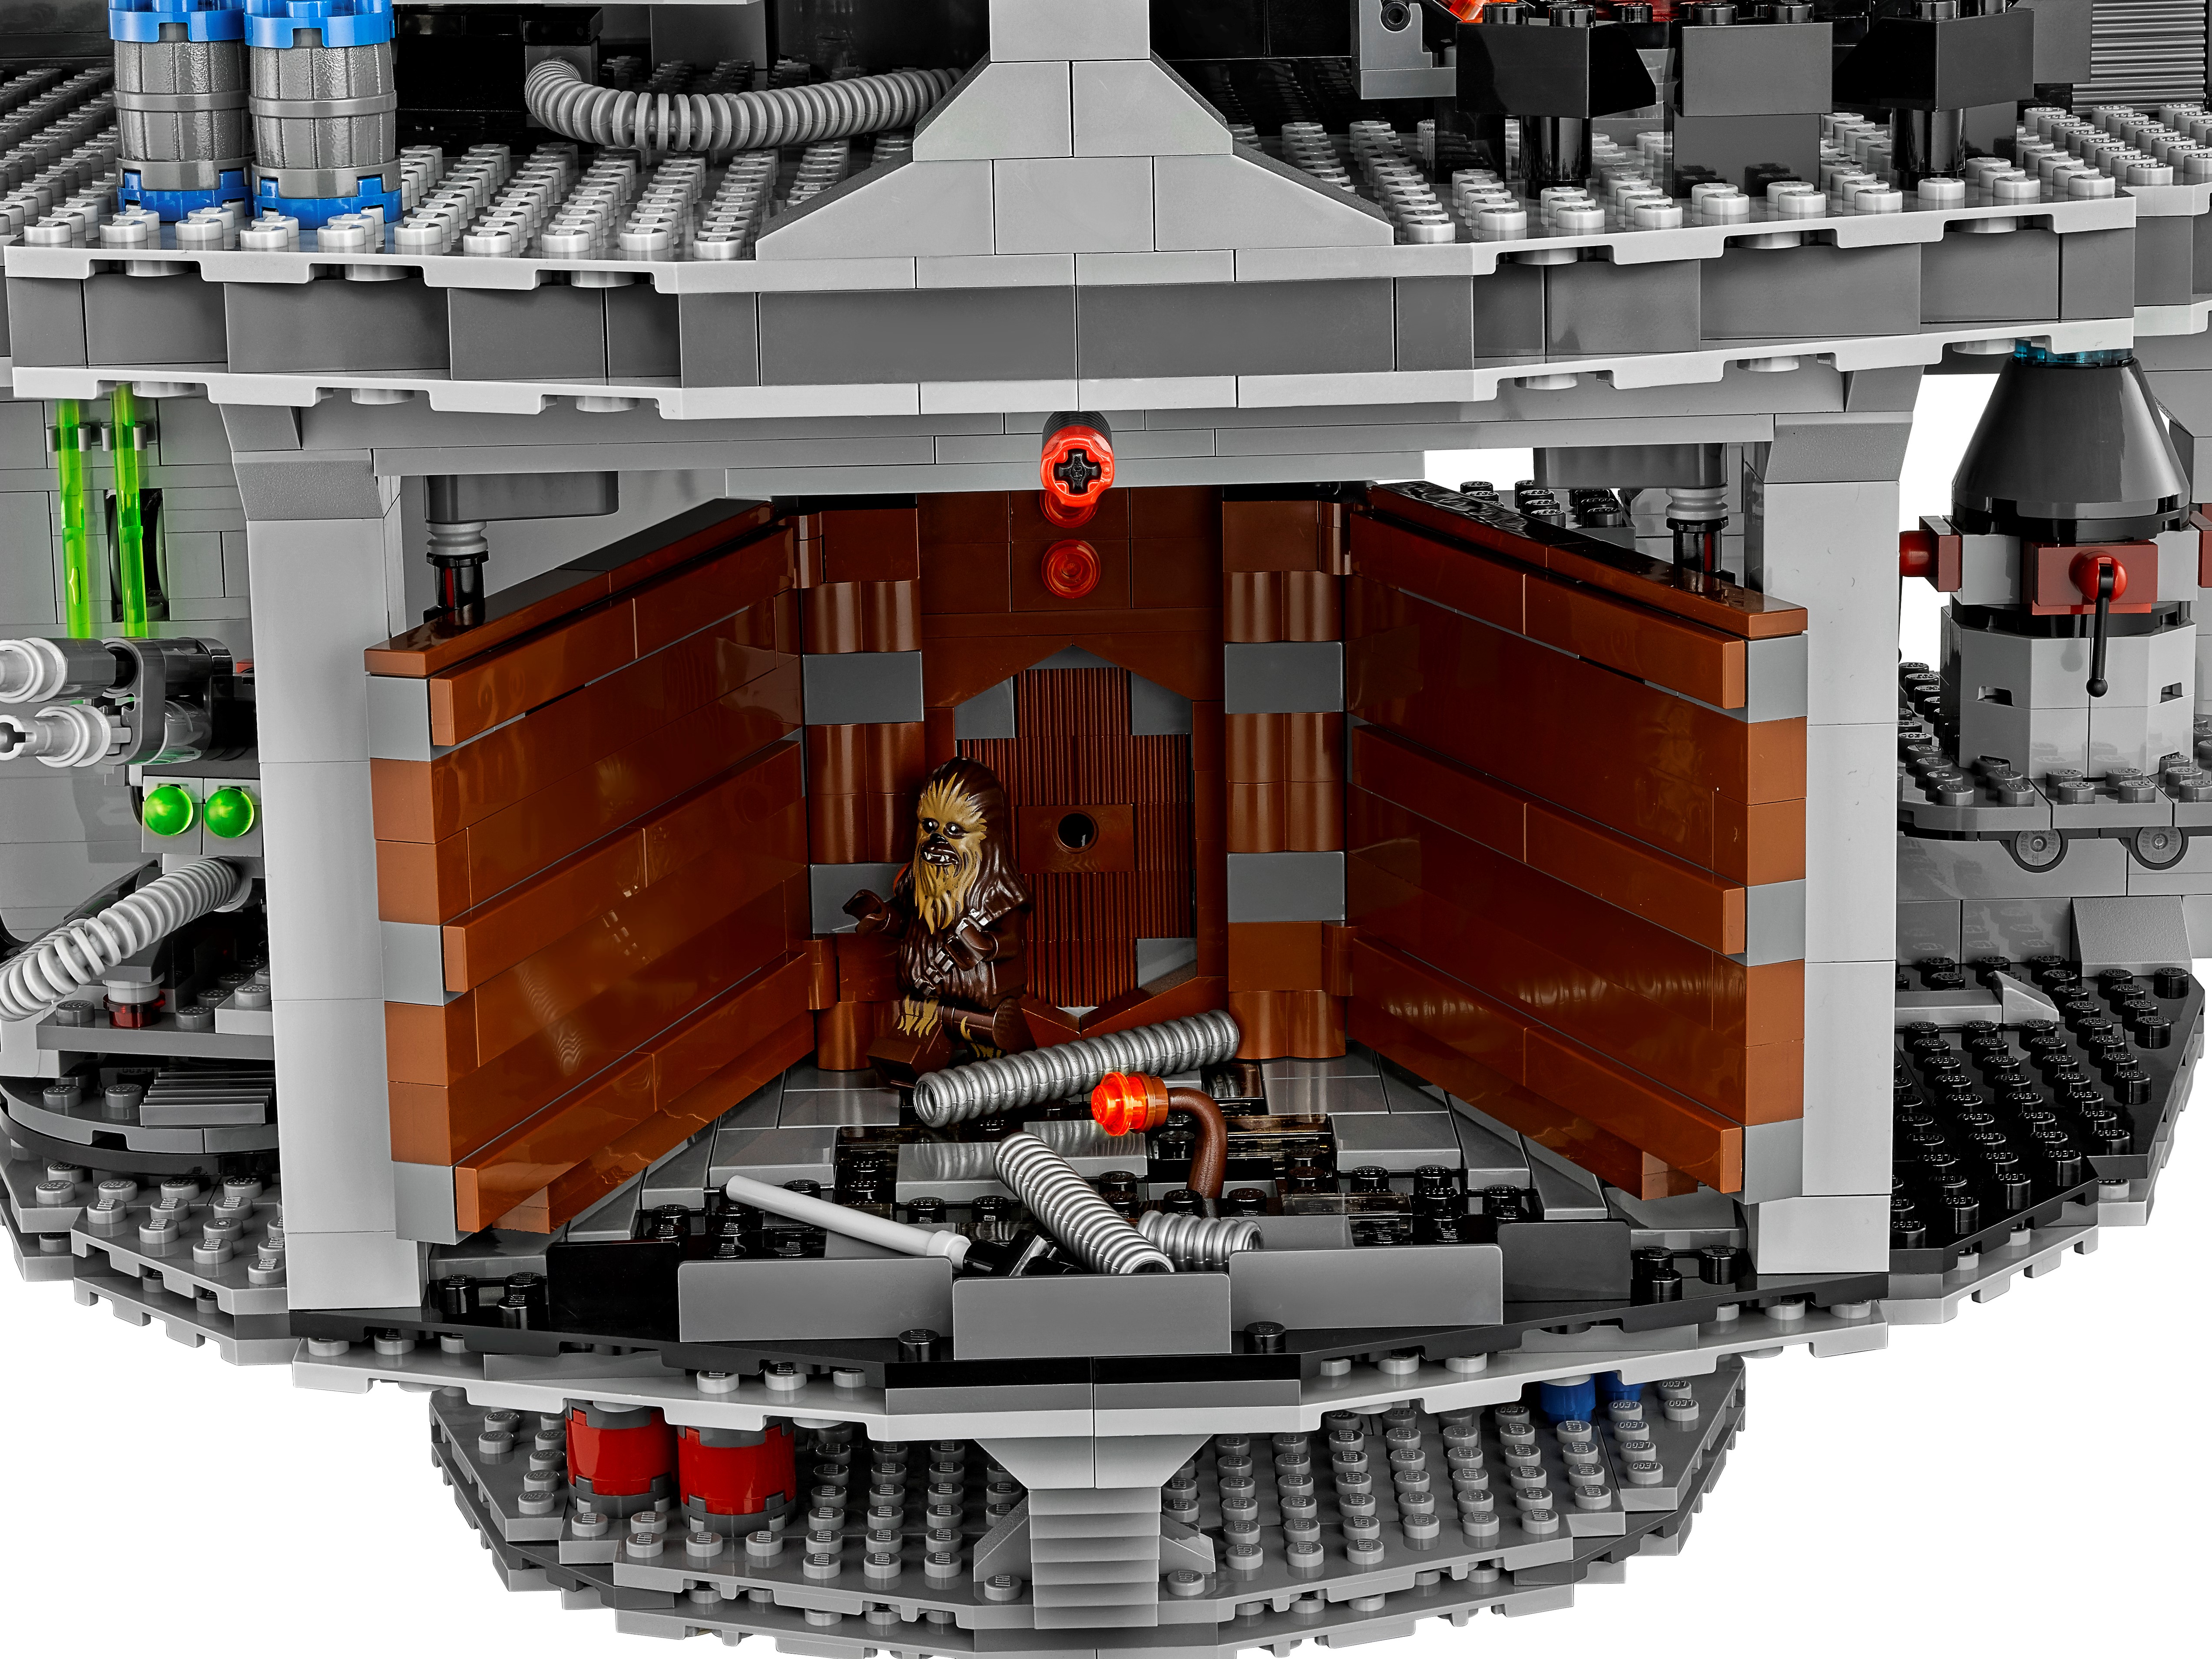 Star Wars : il transforme le Globe de LEGO en Étoile de la Mort